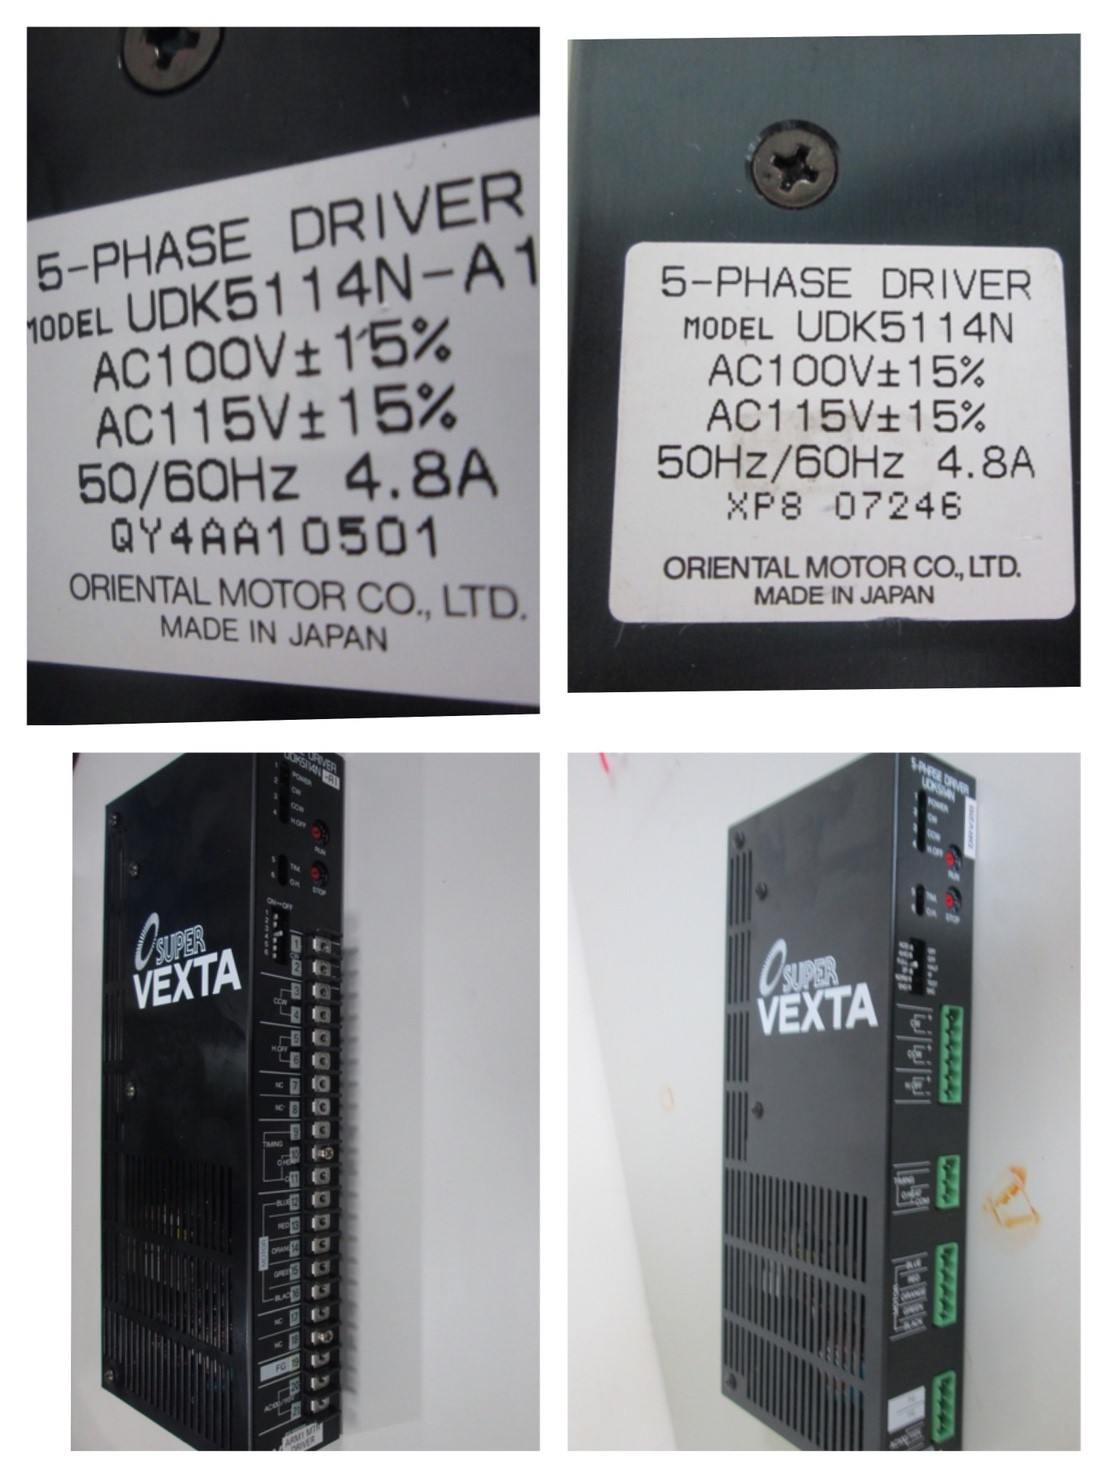 /archive/product/item/images/維修項目/DRIVER/2-VEXTA/Vexta Driver_180830_0019.jpg